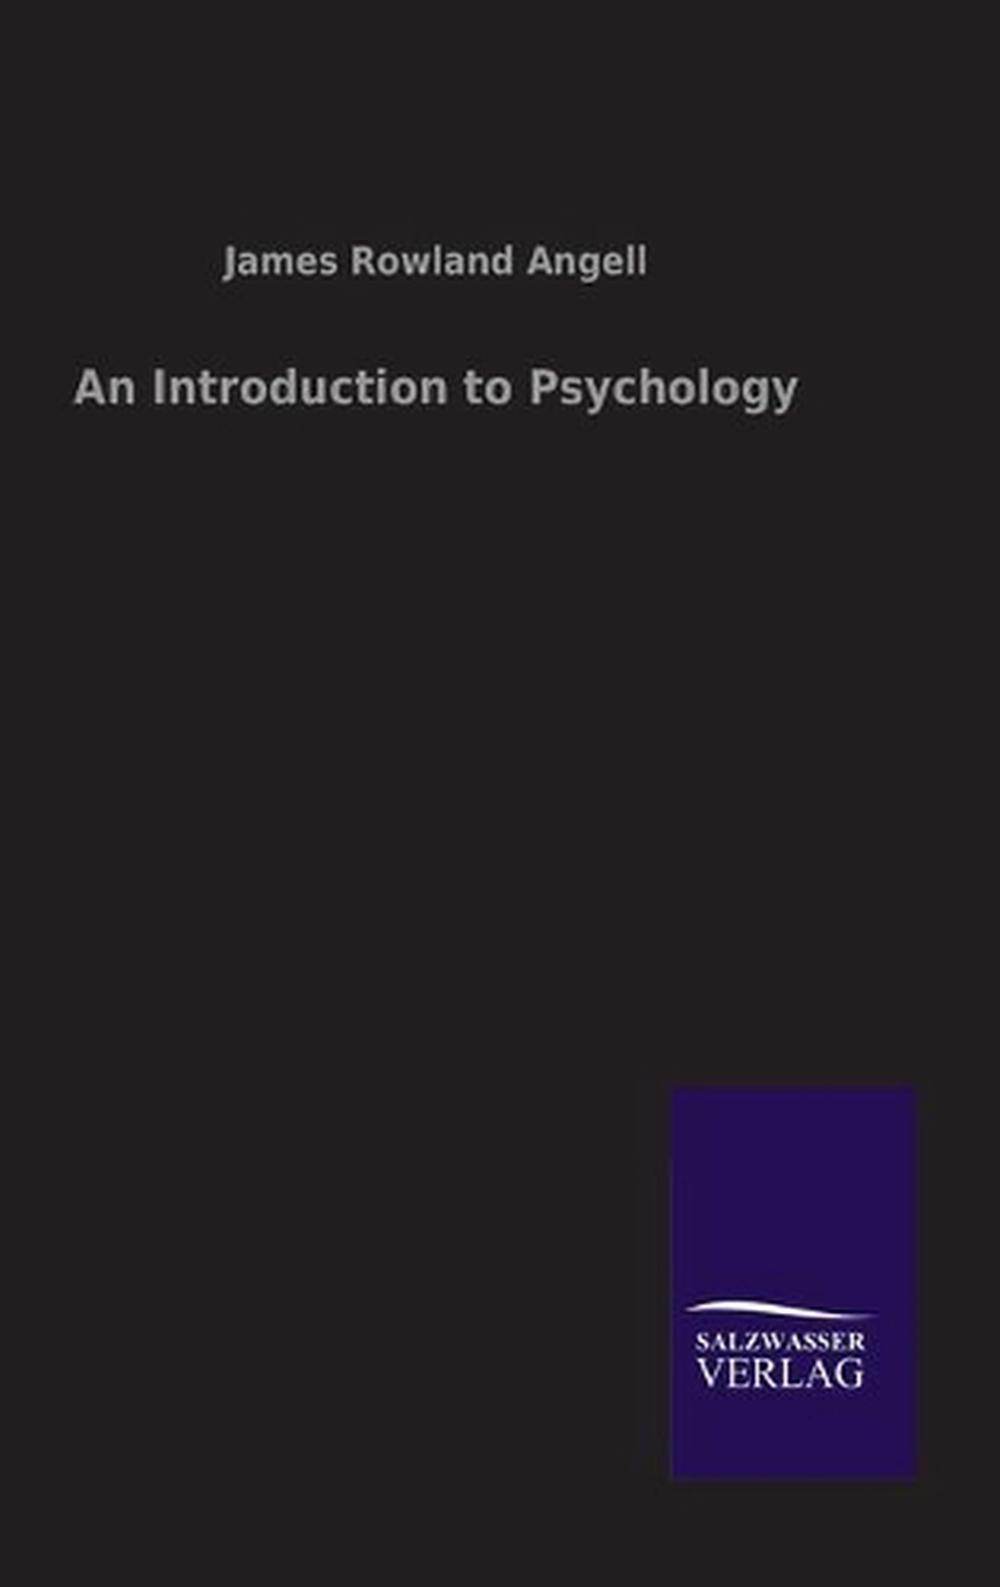 kalat introduction to psychology 11th edition pdf